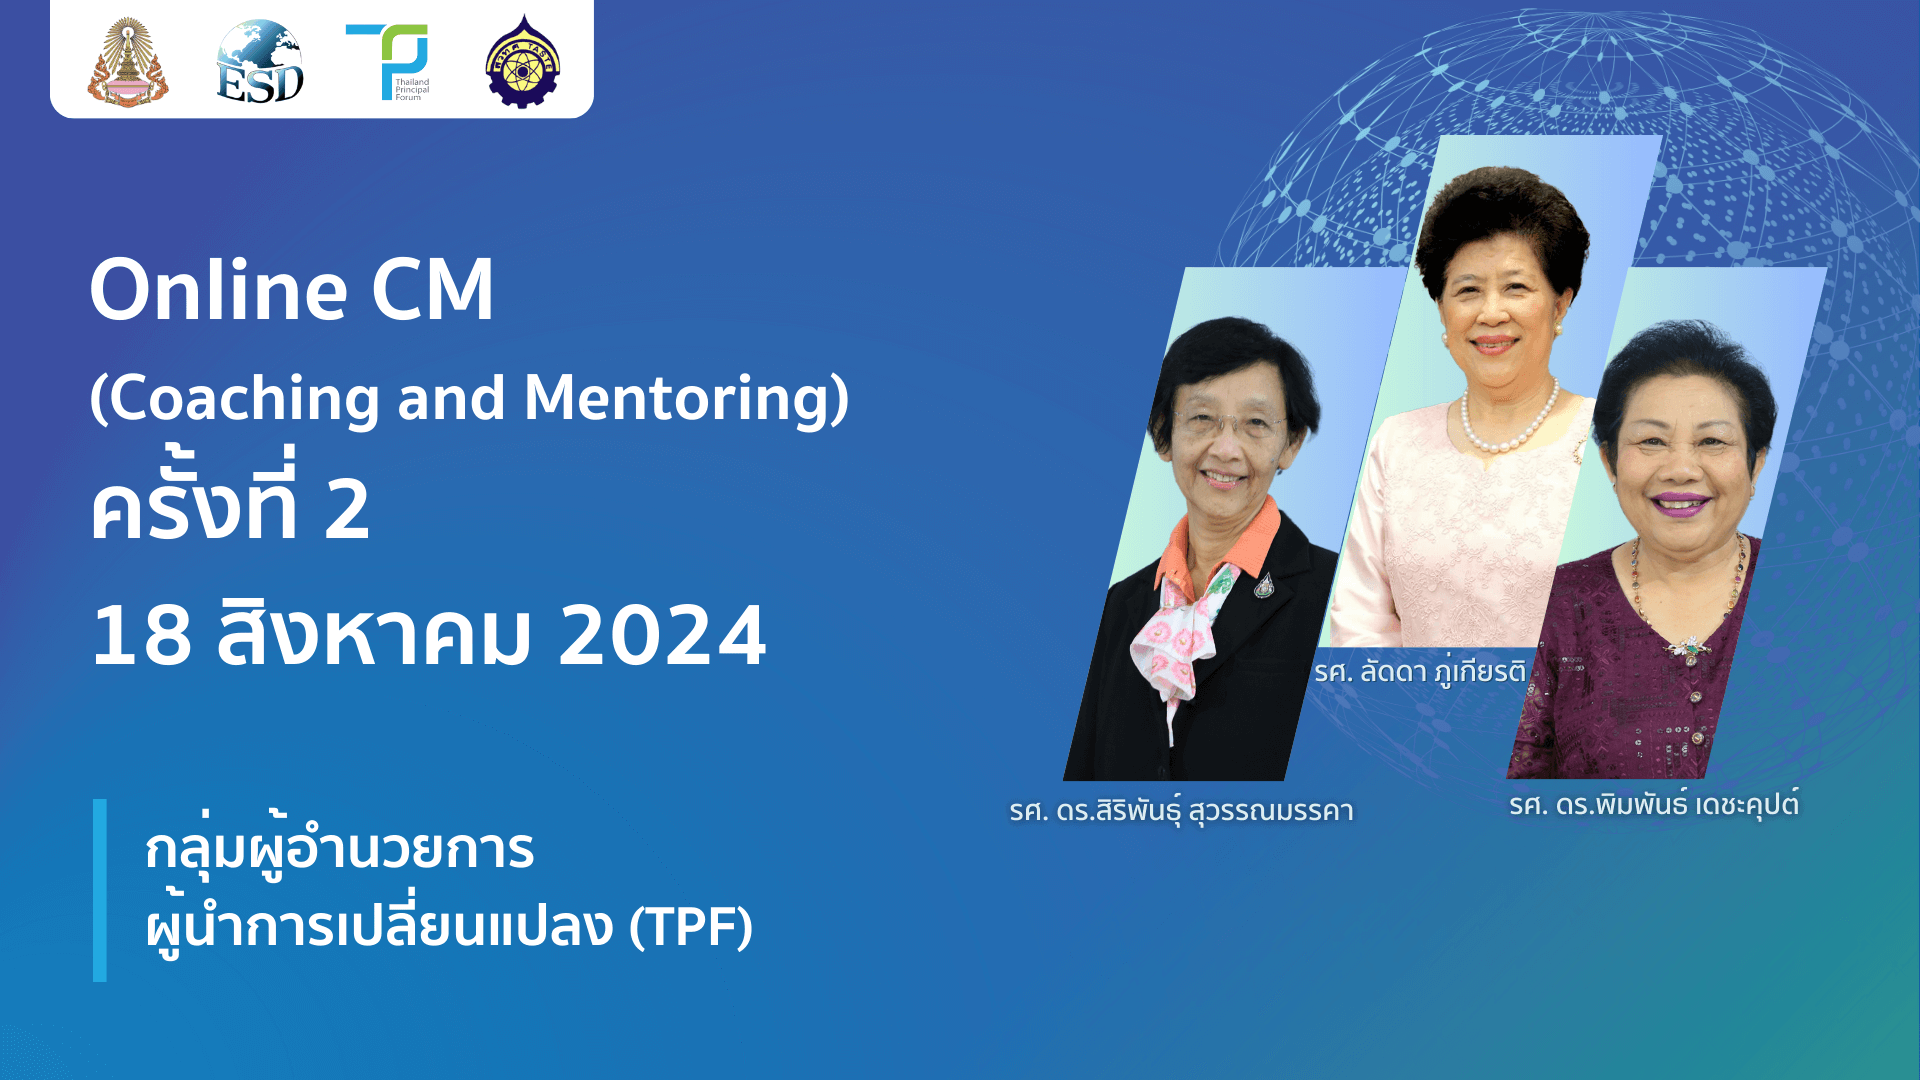 Online CM (Coaching and Mentoring) ครั้งที่ 2 | 18 สิงหาคม 2024